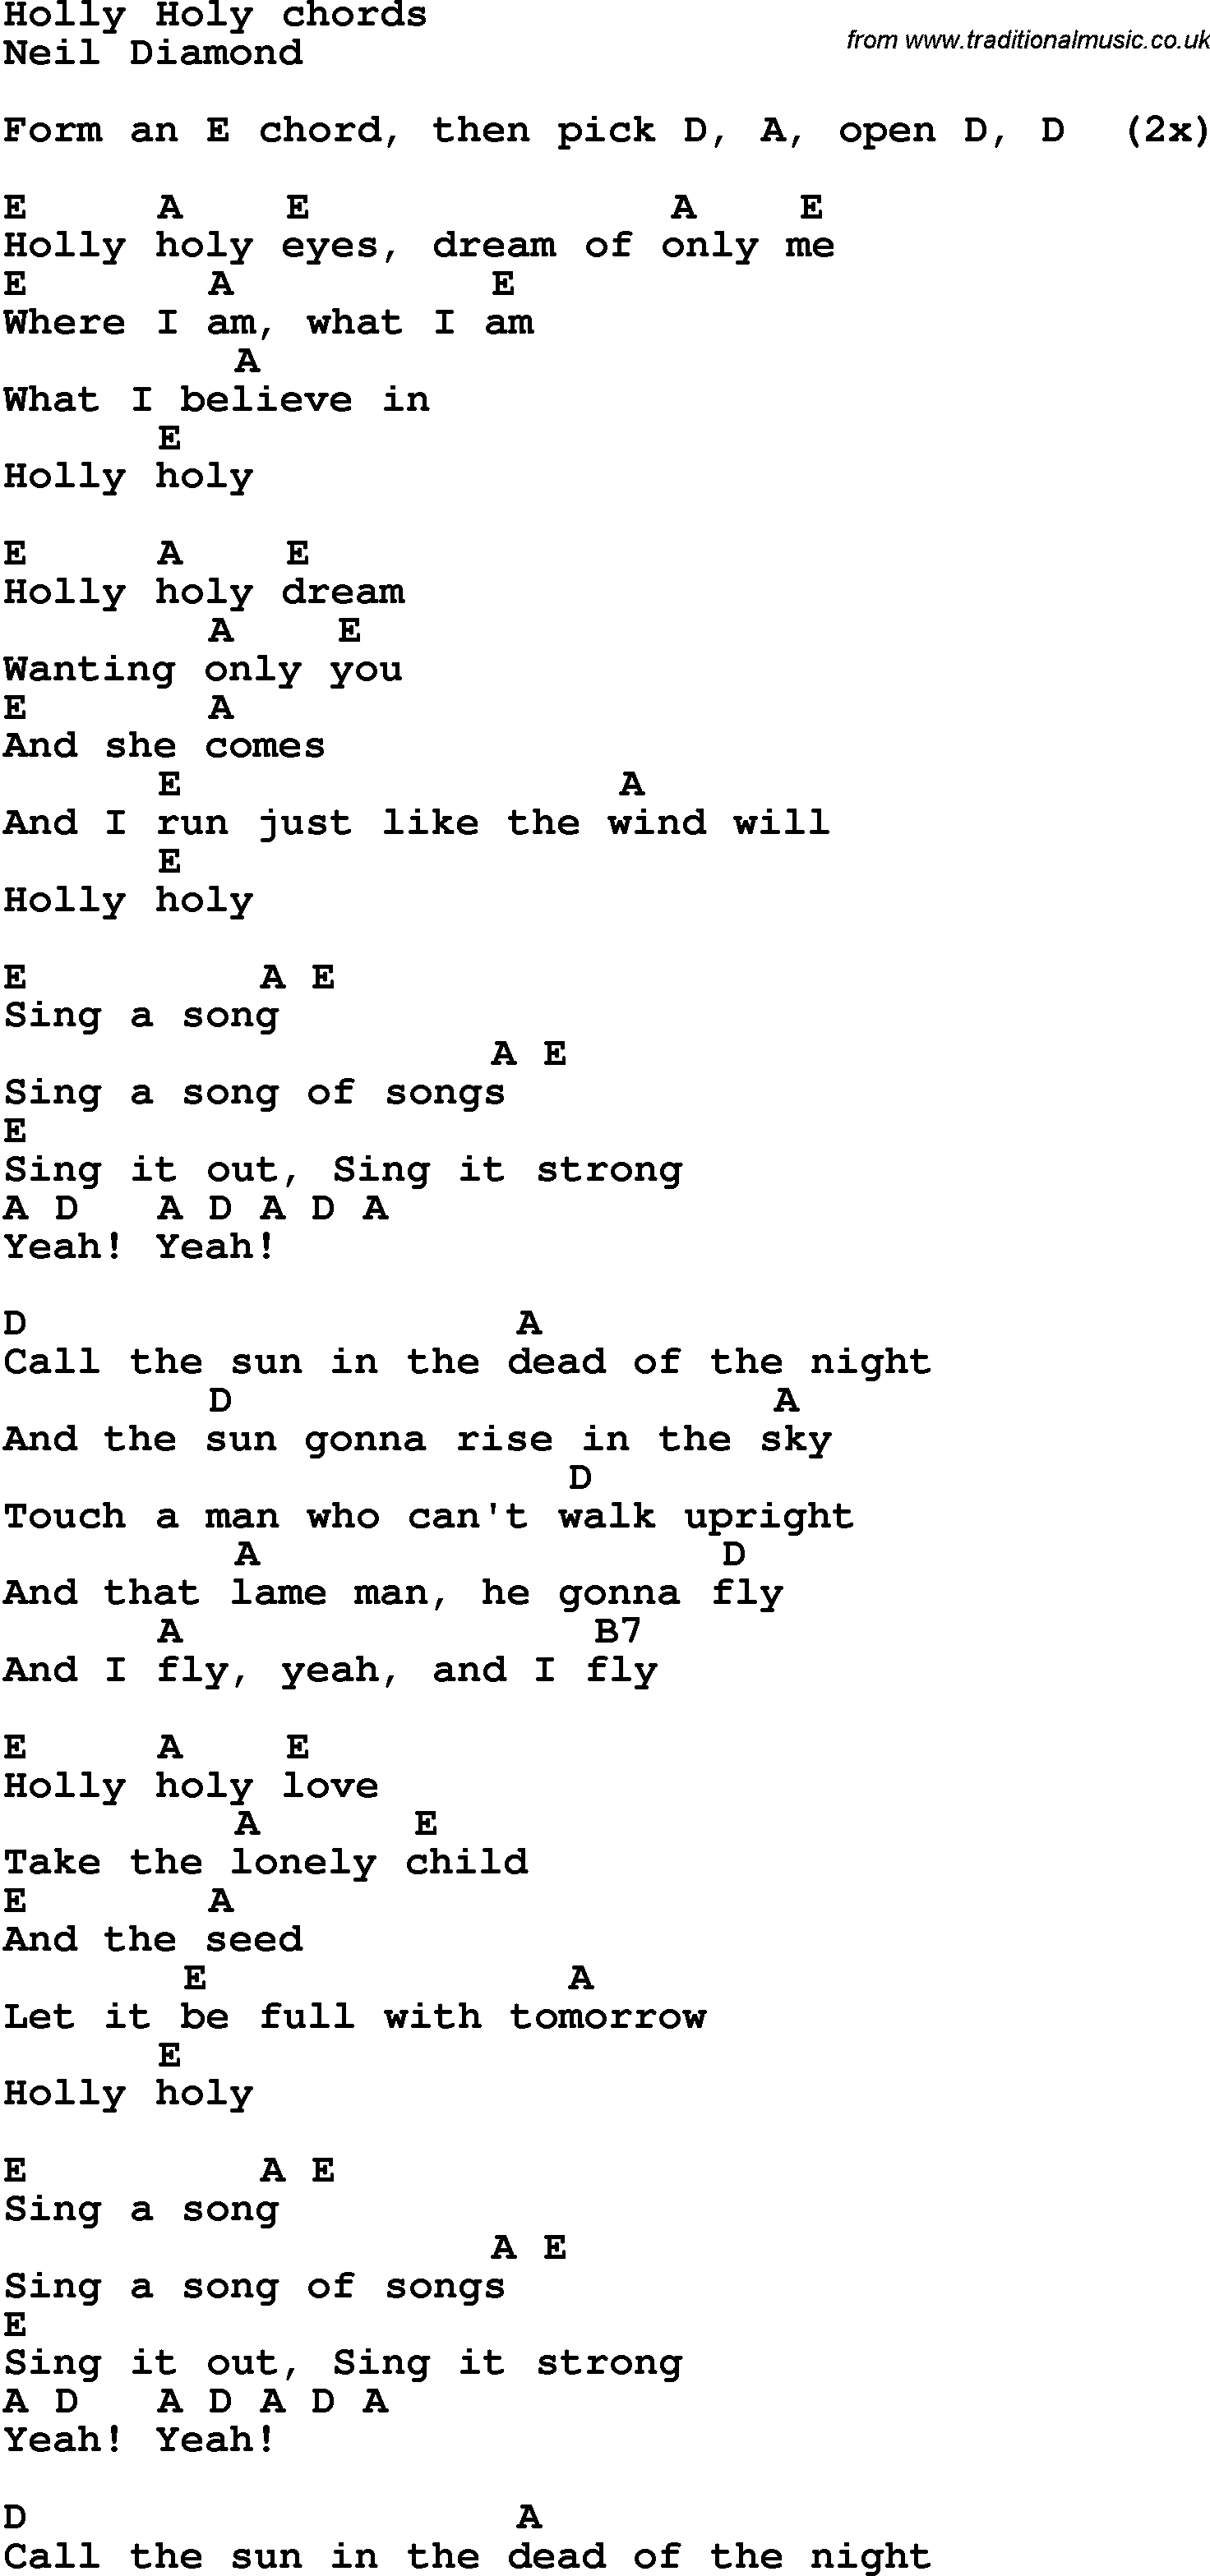 Song Lyrics with guitar chords for Holly Holy - Neil Diamond